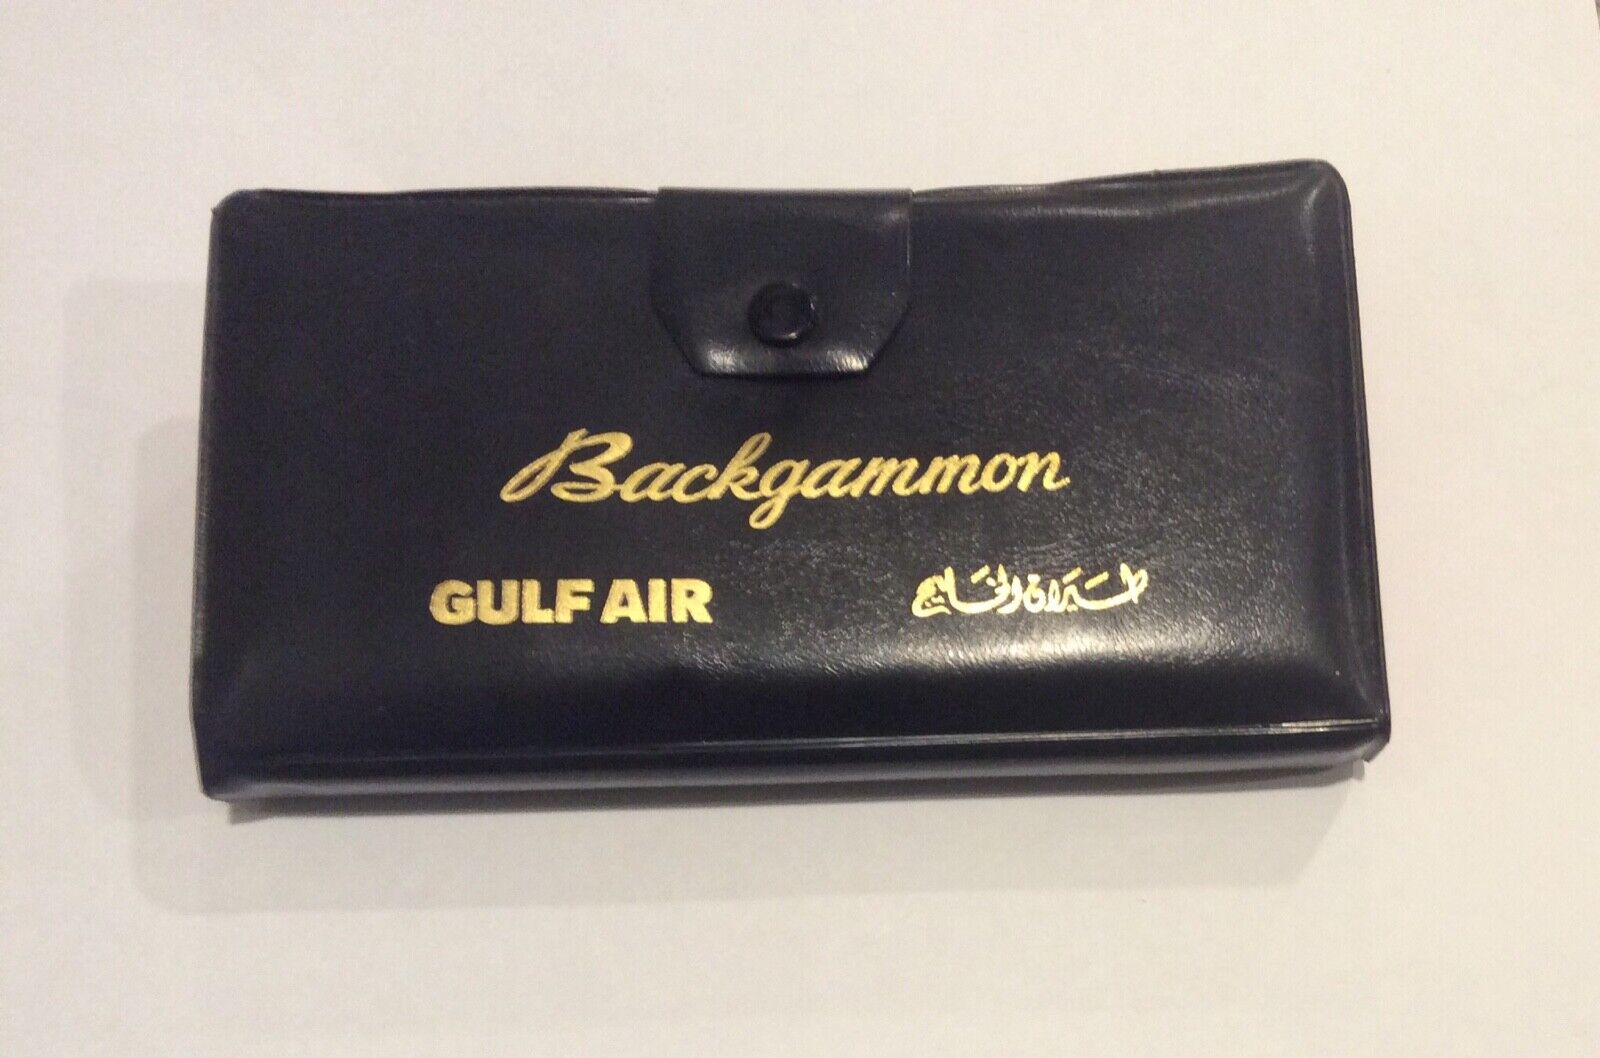 GULF AIR - The Airline of Bahrain Backgammon